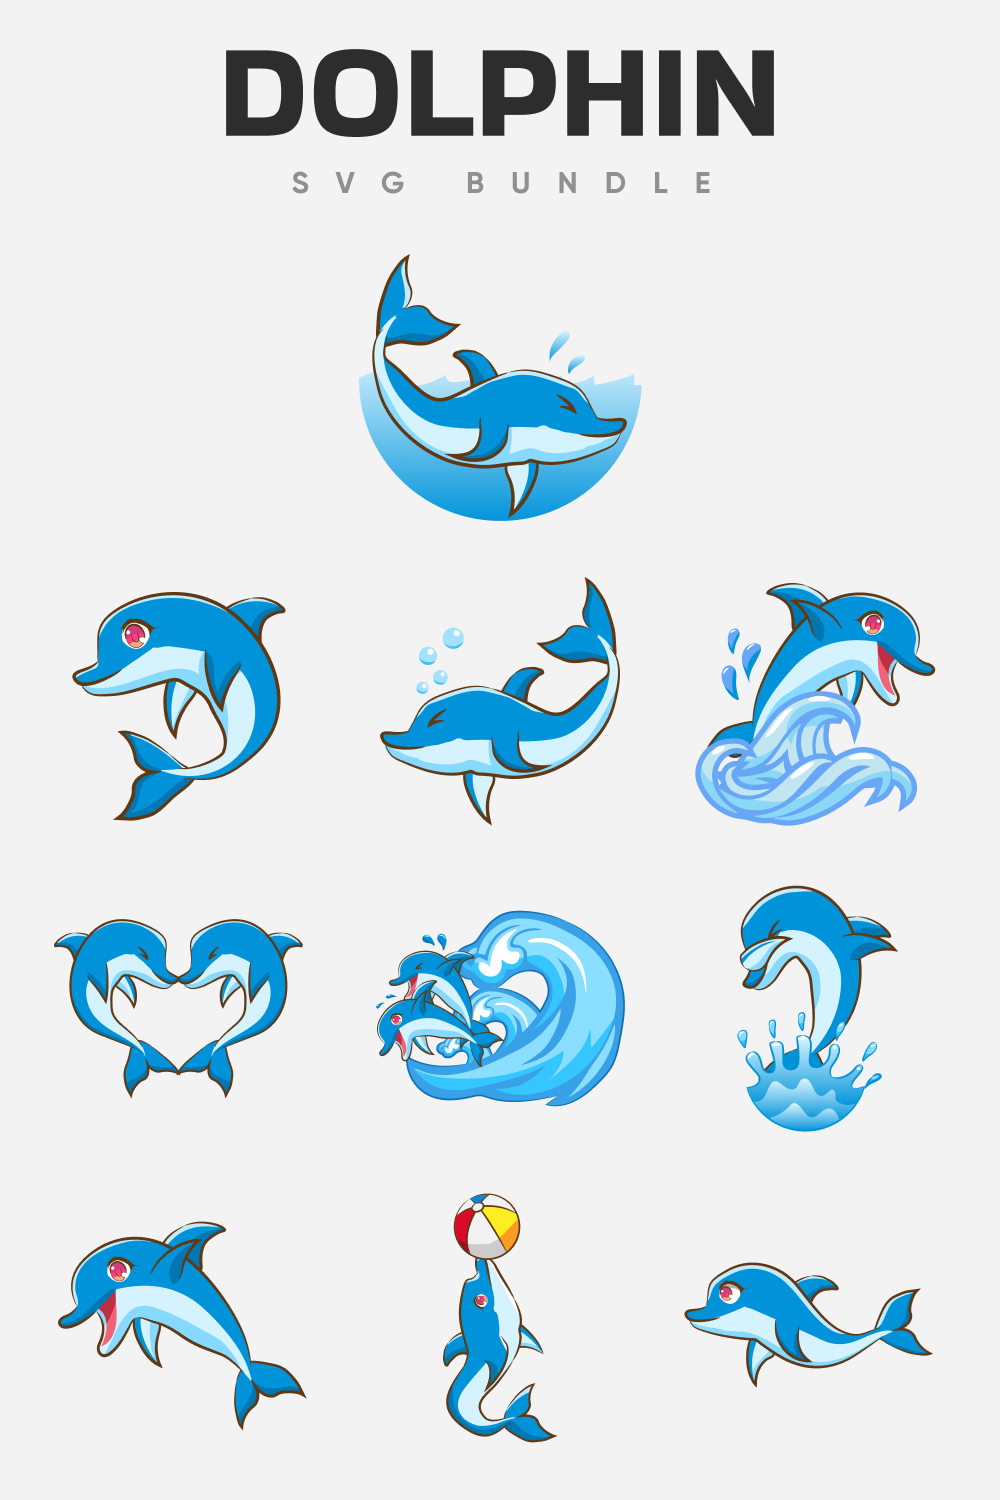 Dolphin SVG bundle.